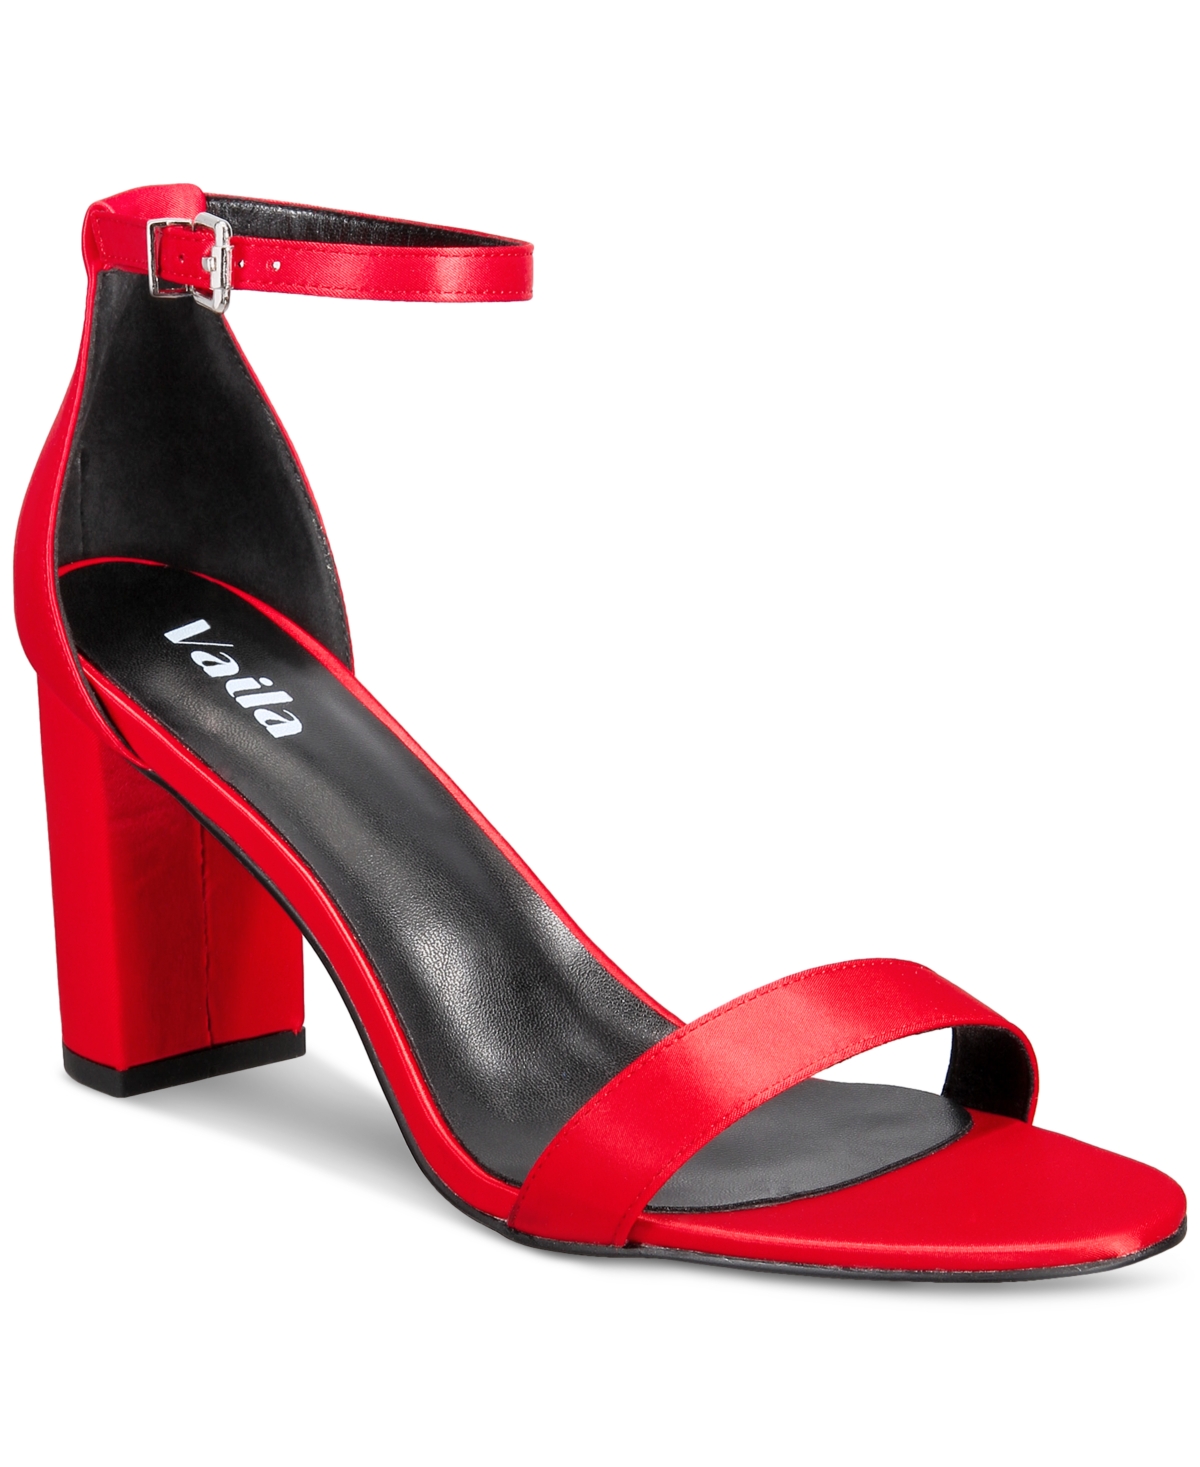 Women's Zoe Ankle-Strap Block-Heel Dress Sandals-Extended sizes 9-14 - Red